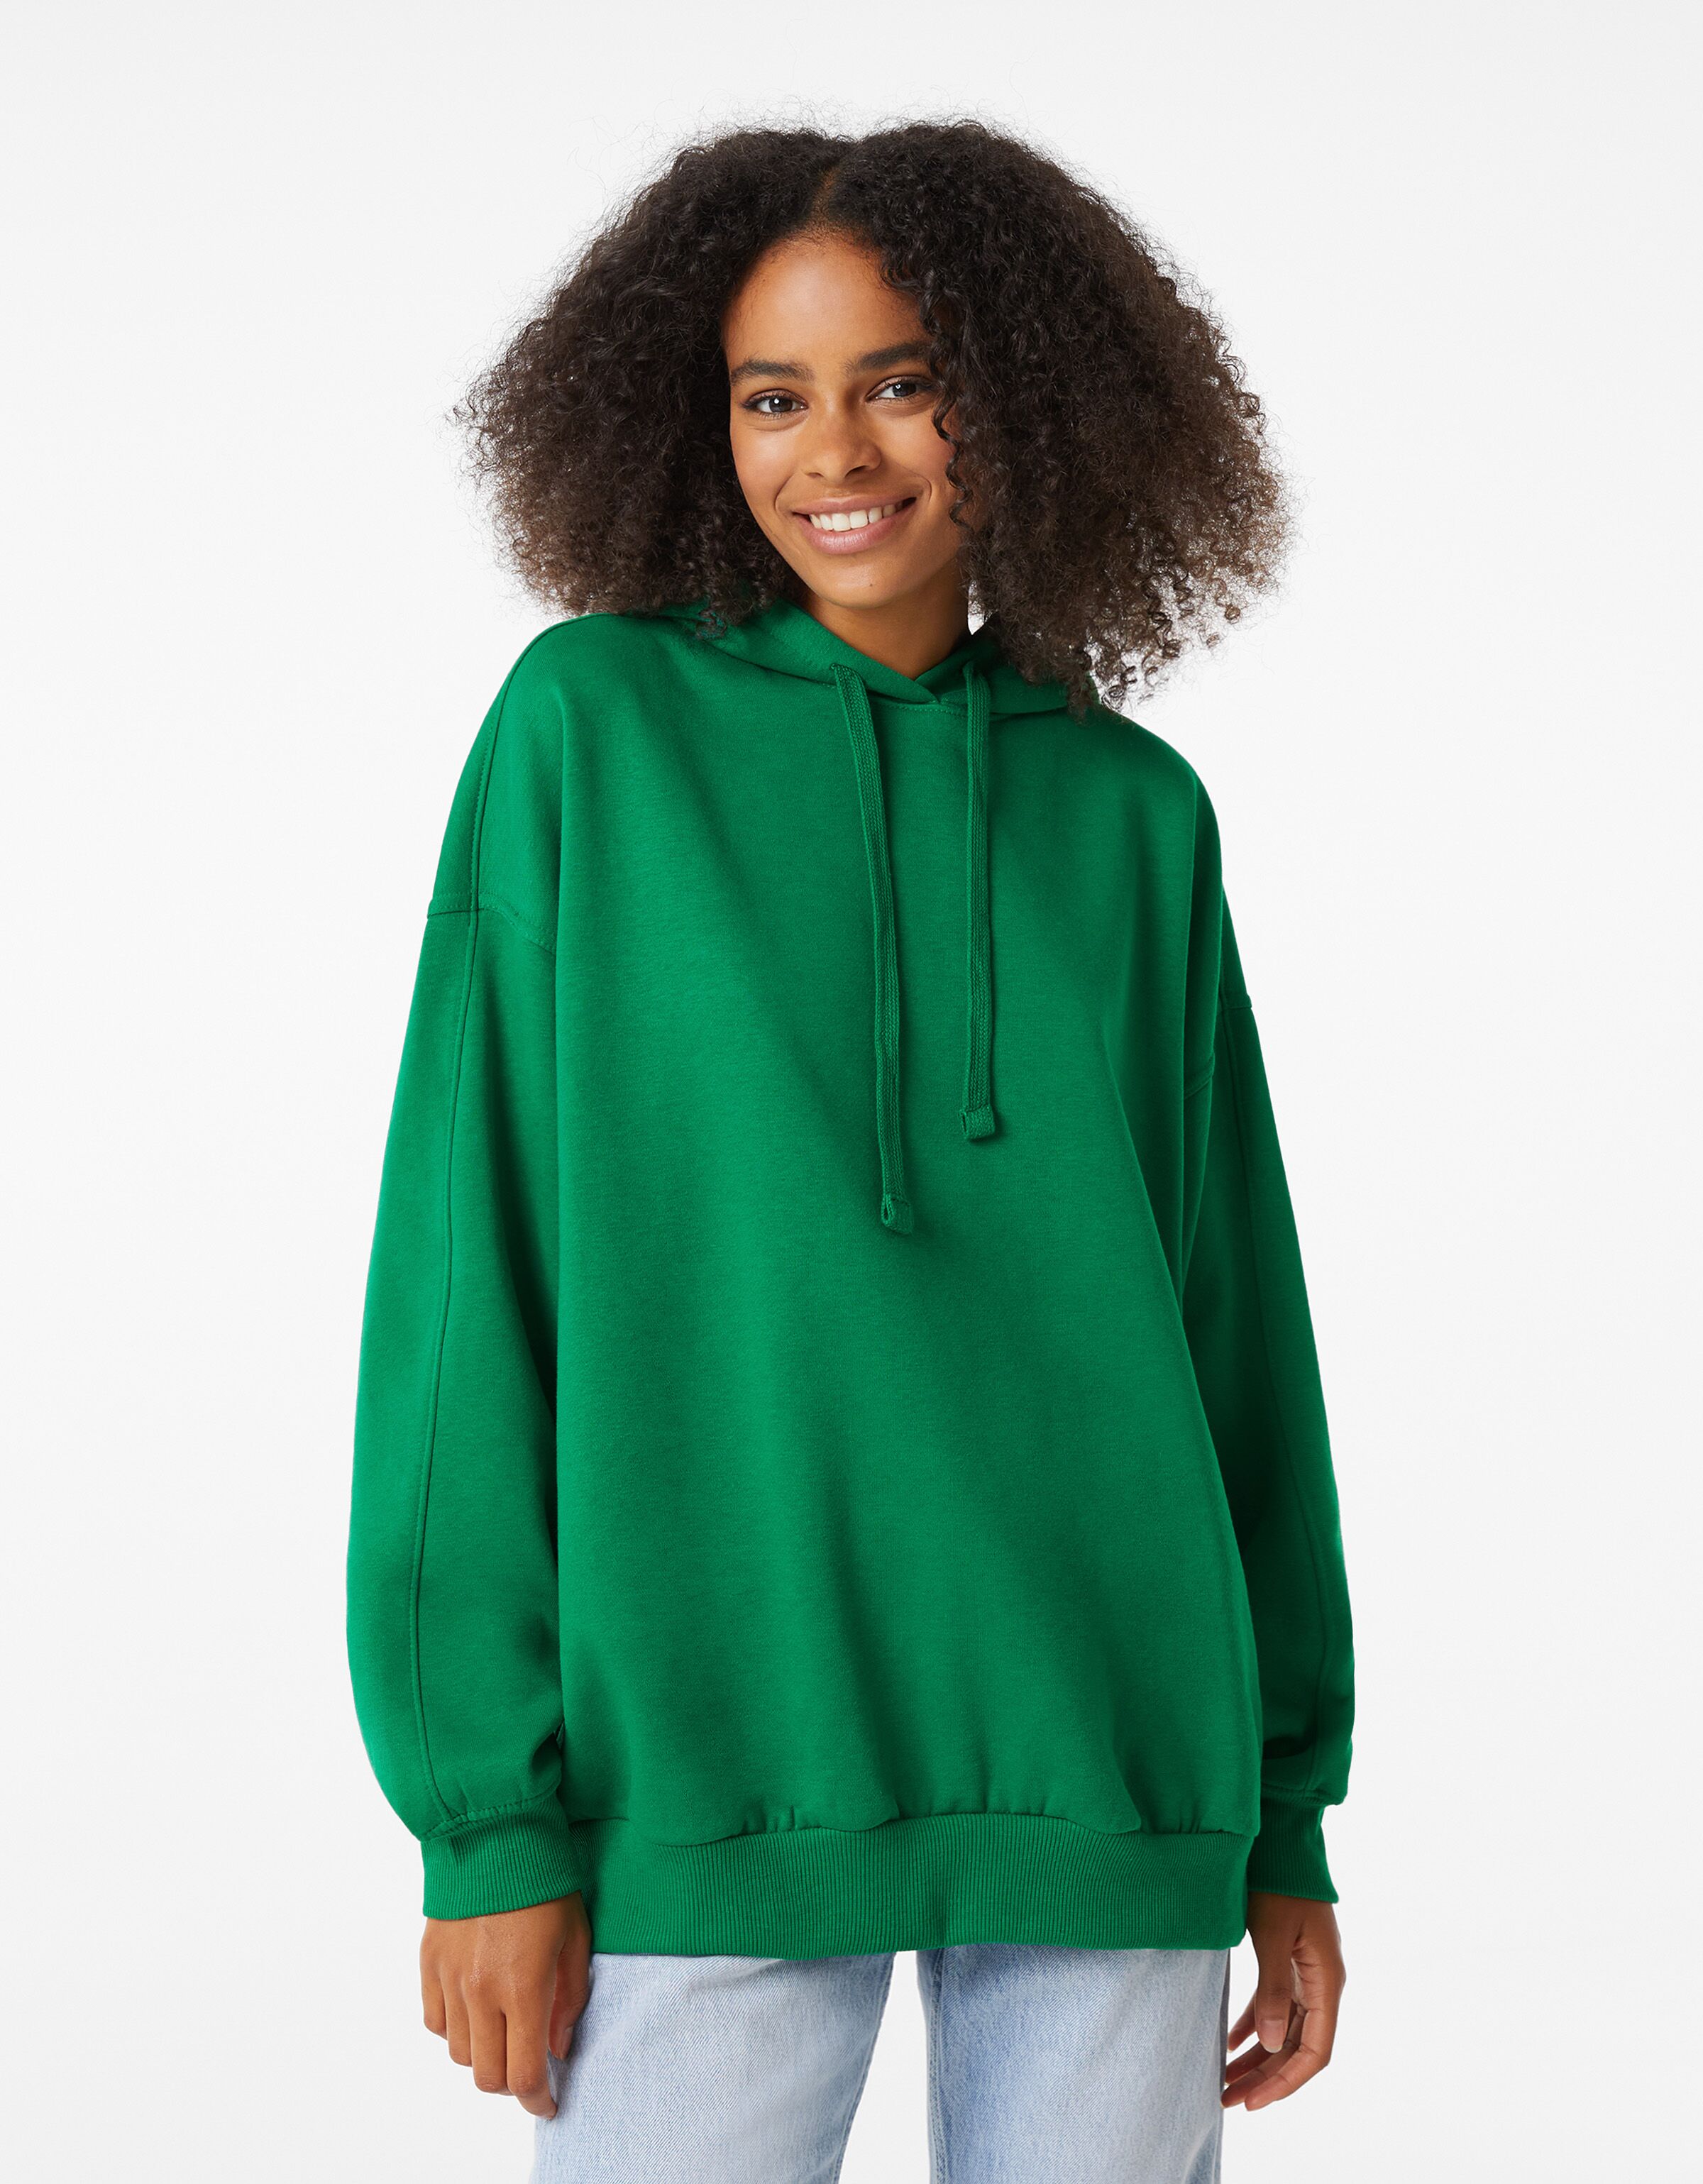 WOMEN FASHION Jumpers & Sweatshirts Hoodless discount 98% Bershka sweatshirt Black S 